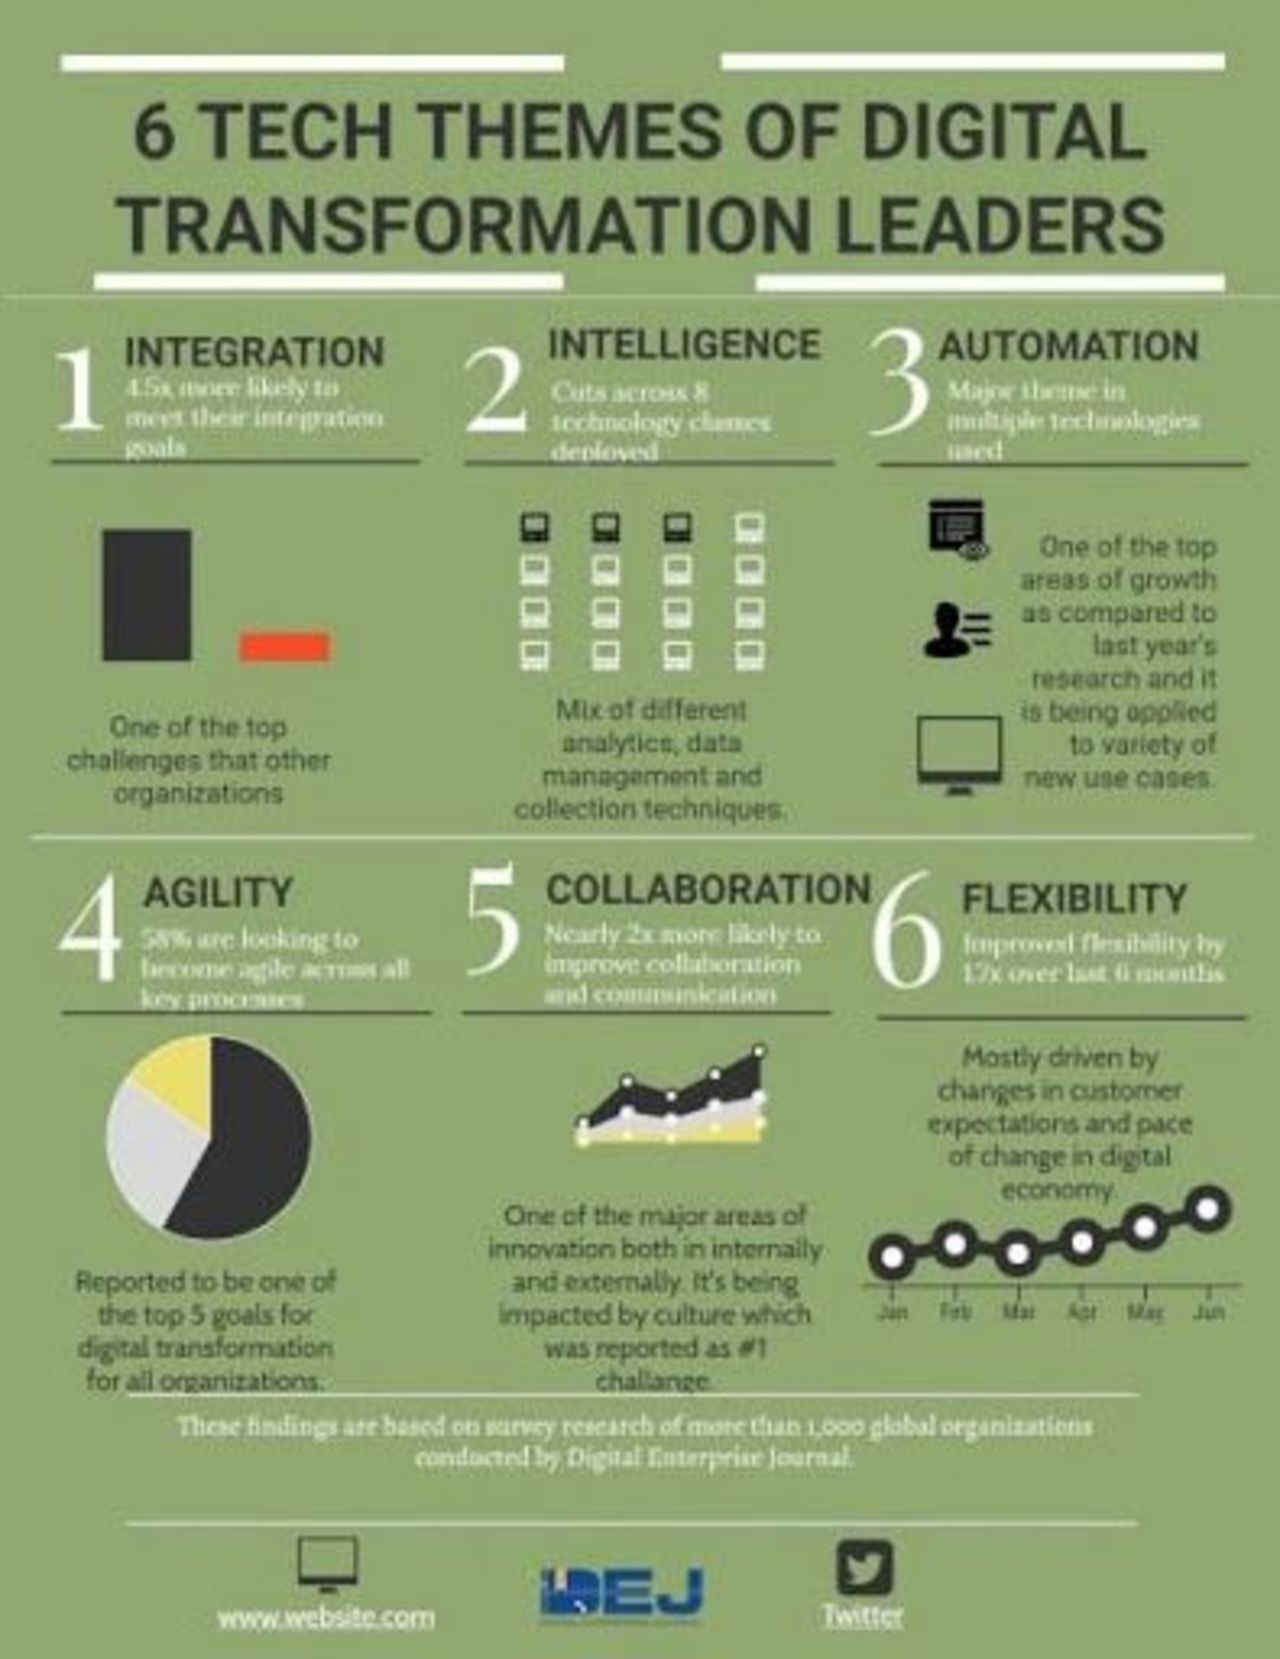 6 #Tech Themes Of #DigitalTransformation Leaders by @dej_io  #BigData #Digital #Technology #Innovation #Business #Influencer #IT Cc: @danielnewmanuv @samighazali @nodexl @williamstim @jamesmarland https://t.co/5T8pIeg7iy